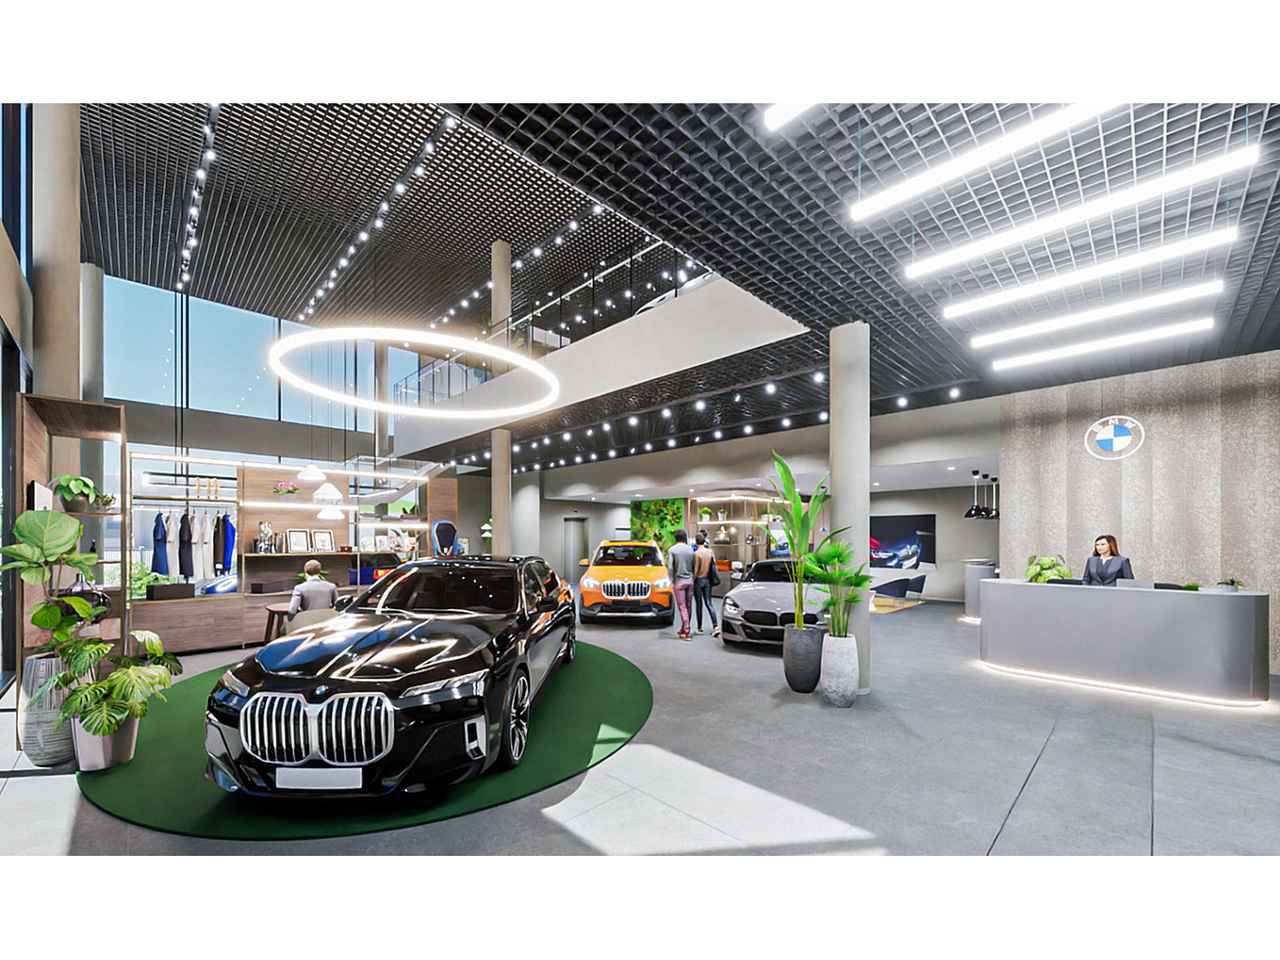 BMW／MINIが新しいショールーム コンセプト「リテール ネクストデザイン」を導入し、順次採用